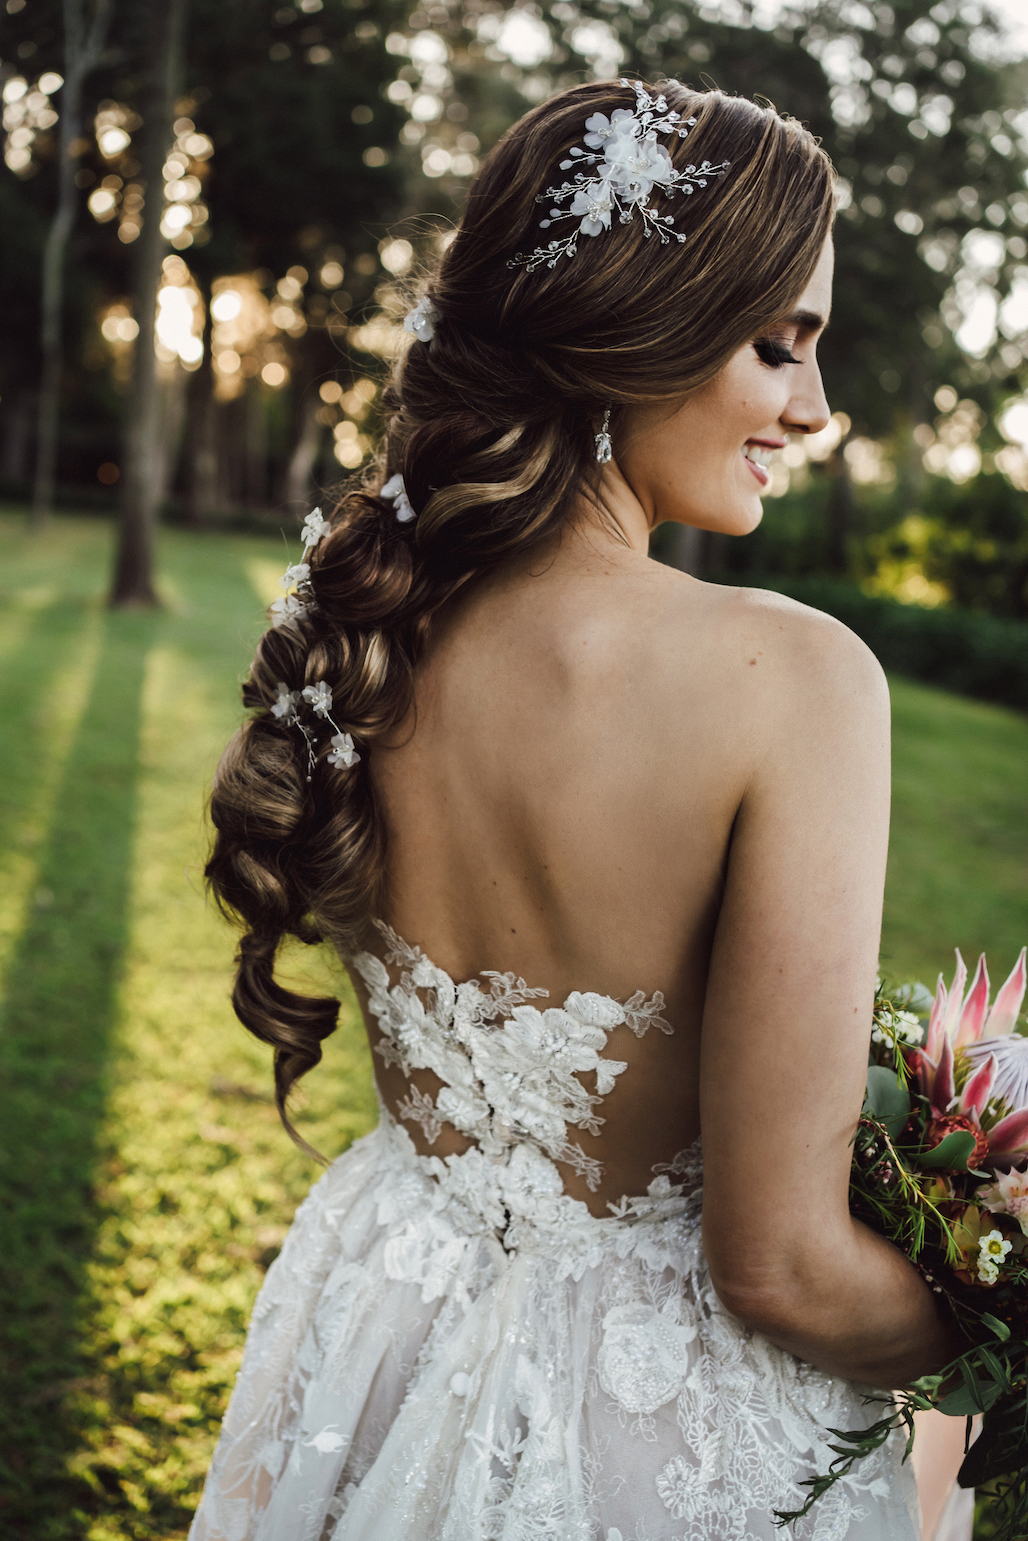 Pre Wedding Hair Care Tips | Philippines Wedding Blog